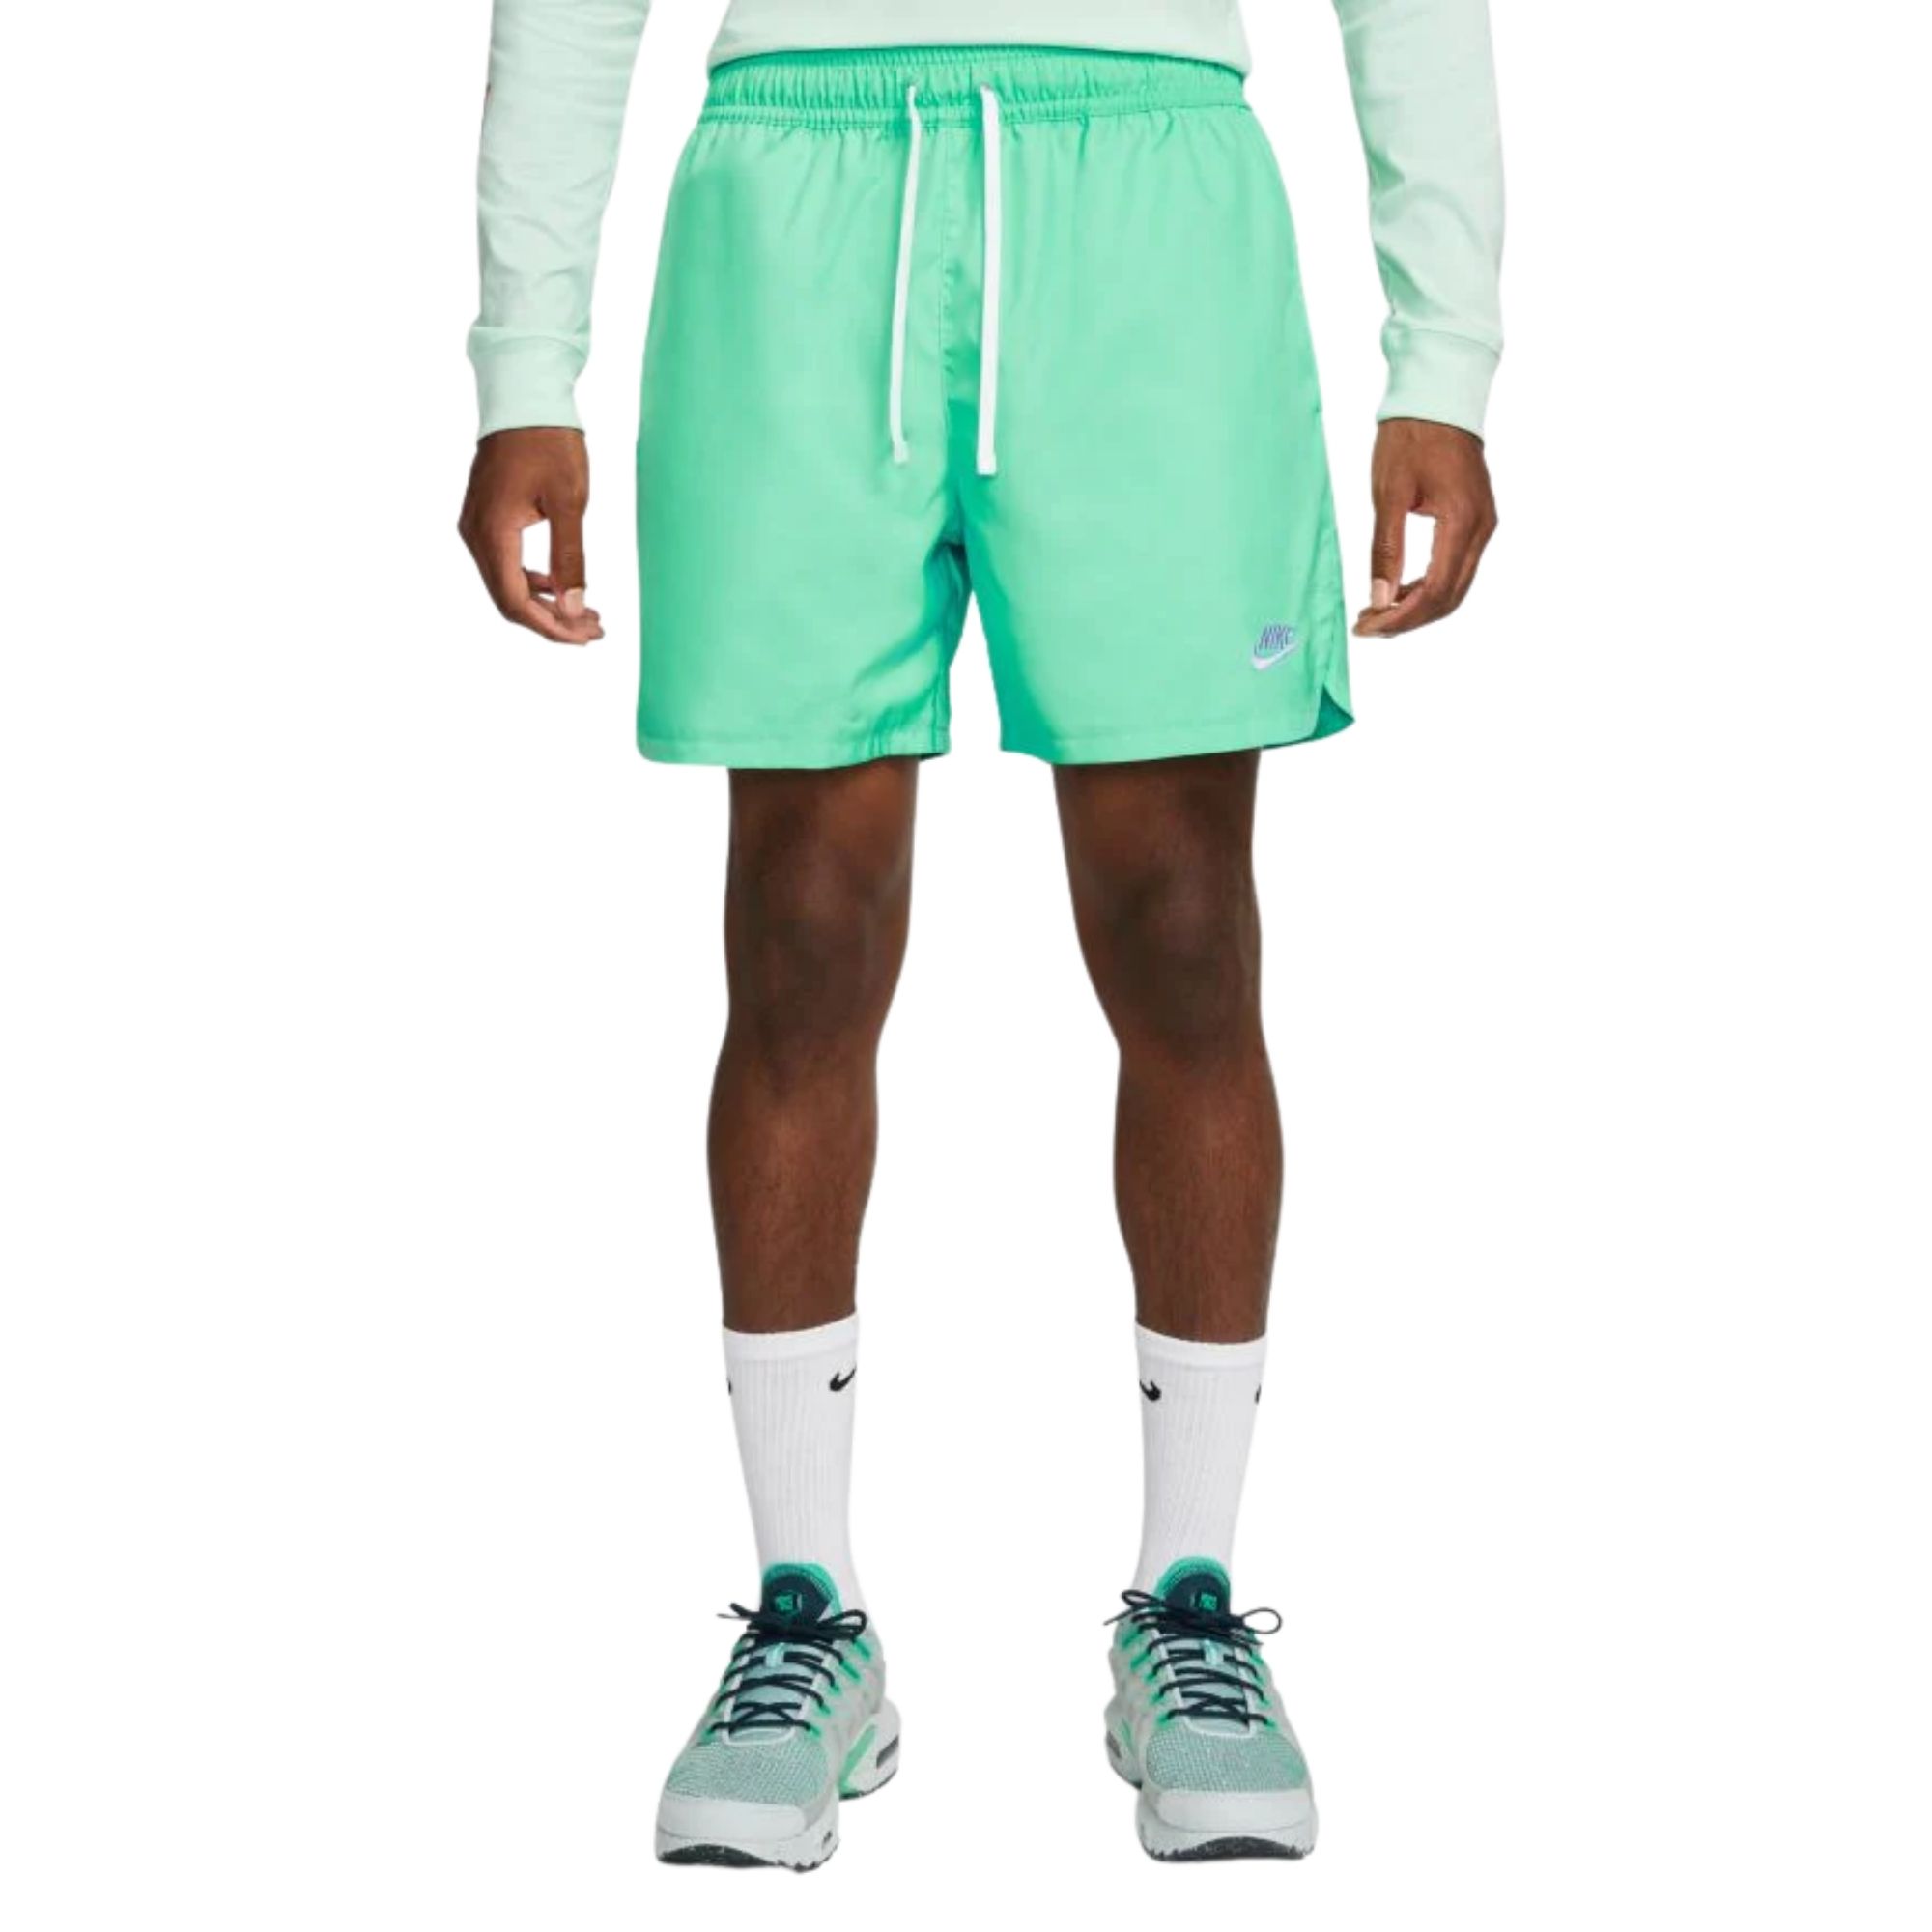 Shorts Nike Tempo Feminino - Azul - Bayard Esportes